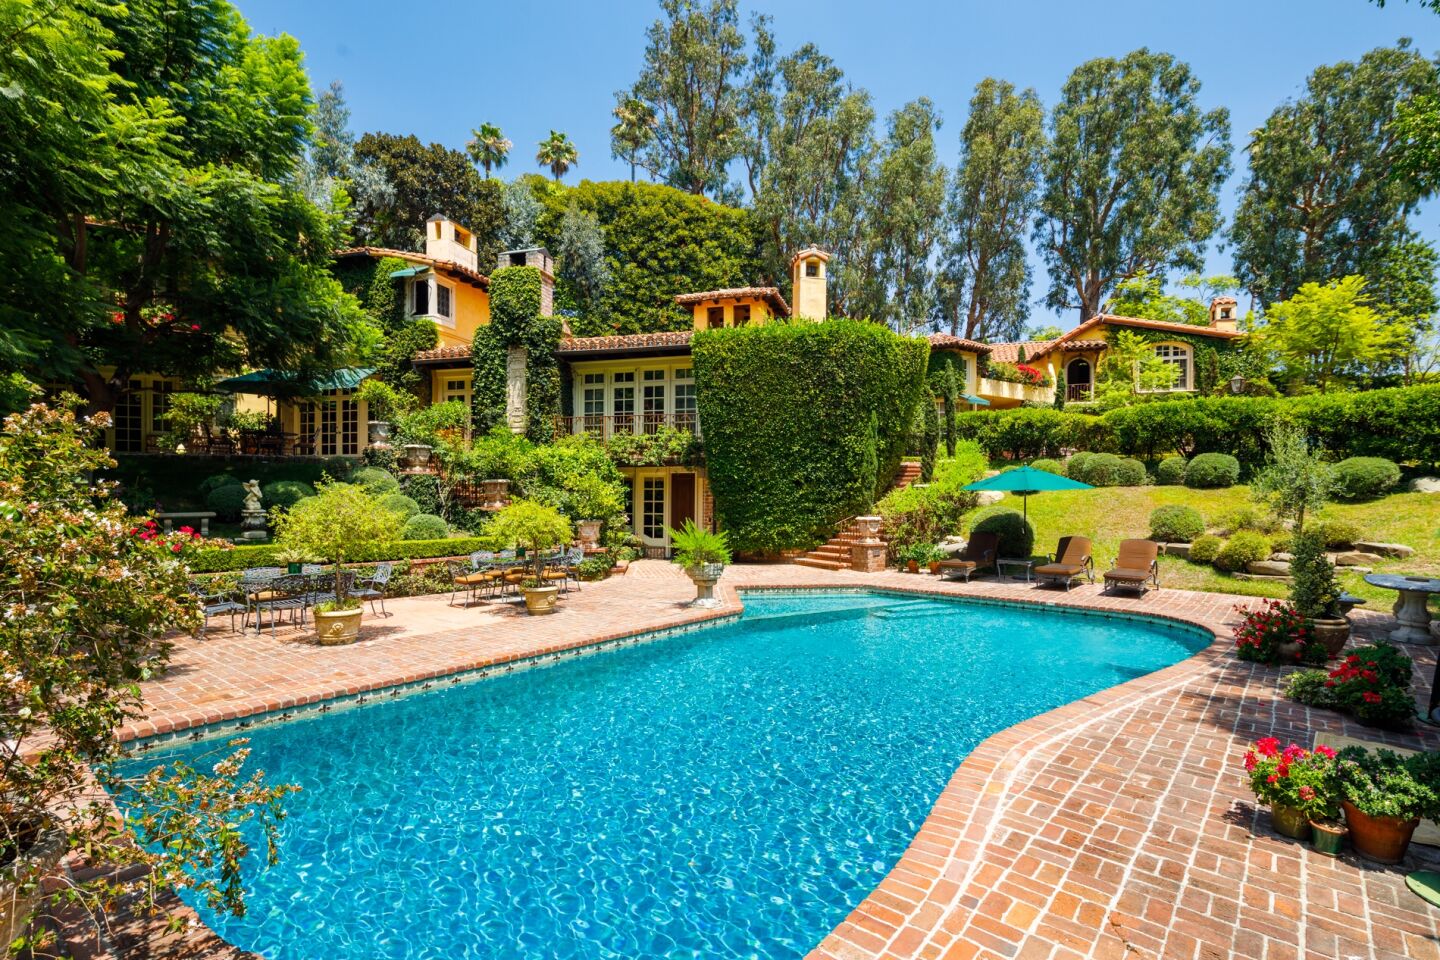 Priscilla Presley's longtime Beverly Hills home